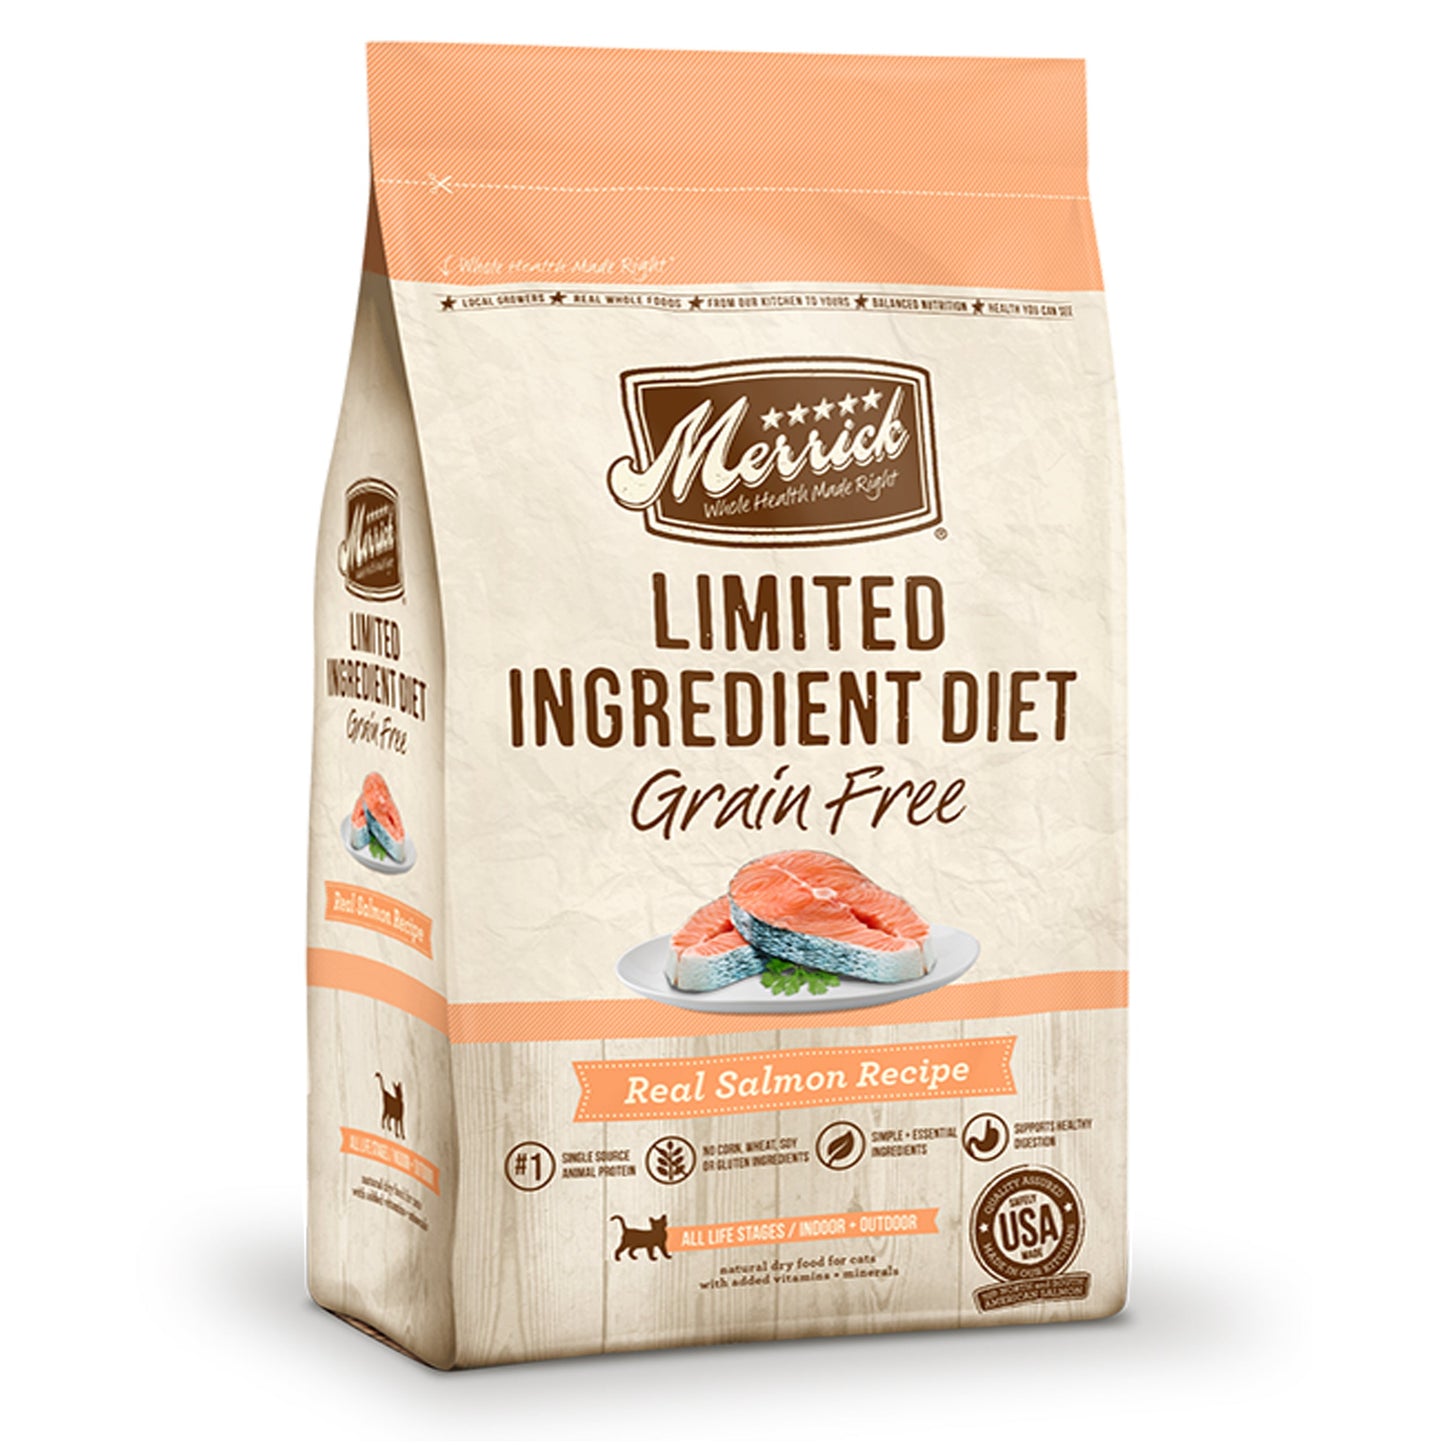 Merrick Limited Ingredient Diet Grain Free Real Salmon Recipe 4Lb